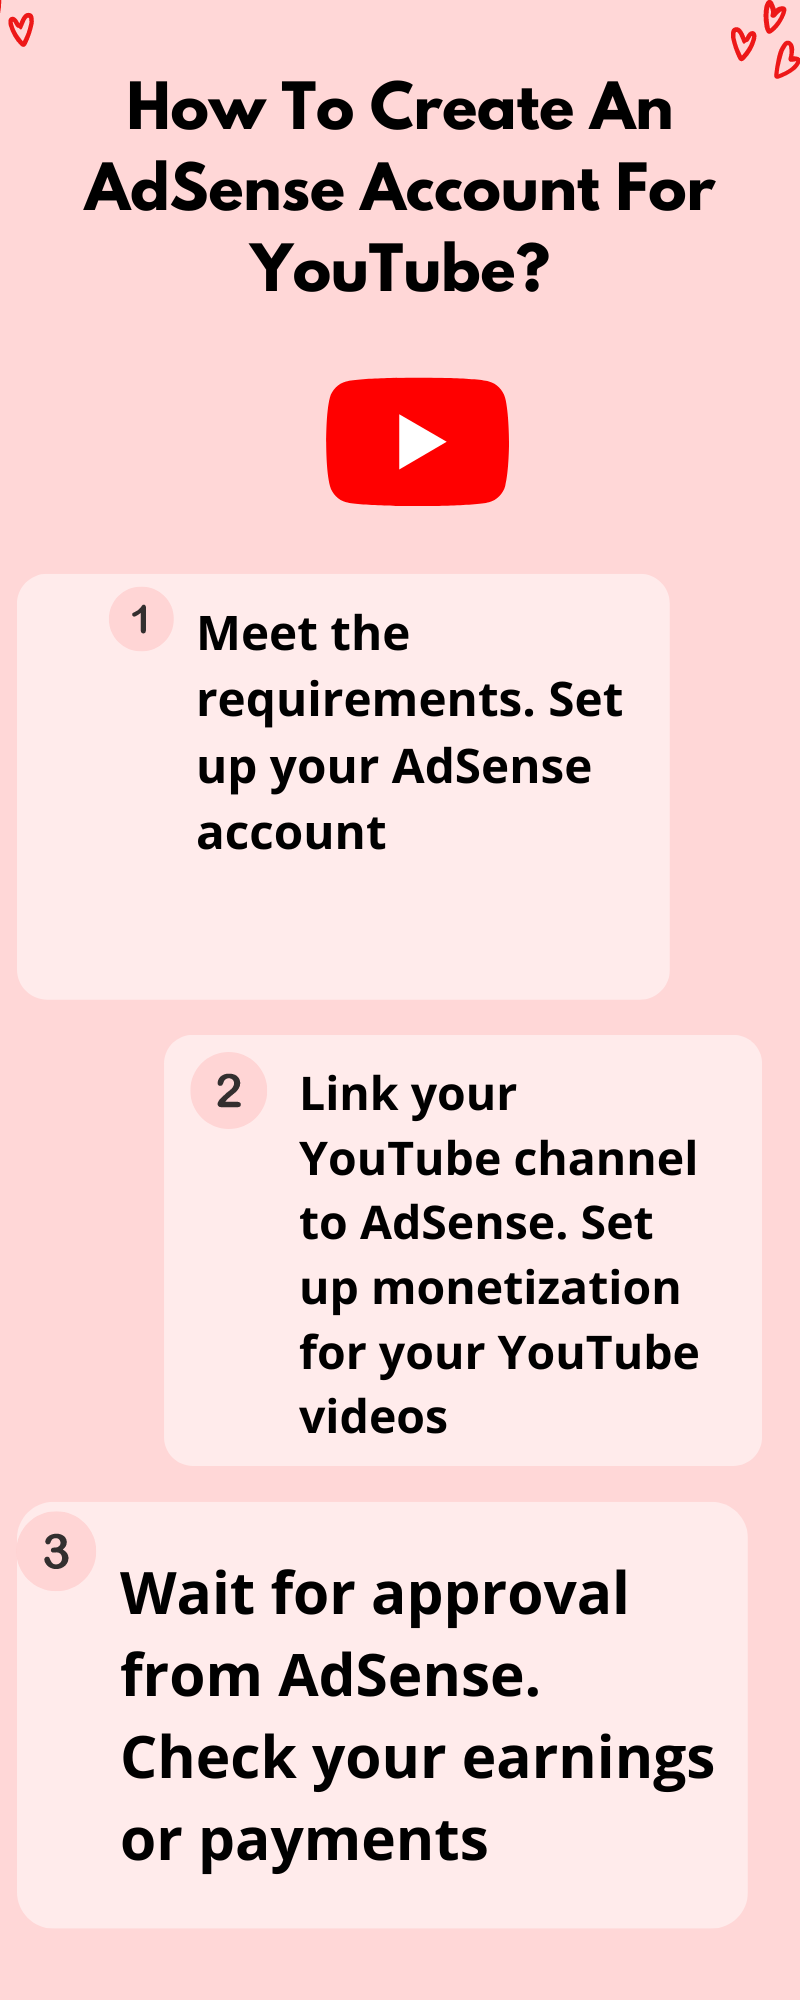 Create An AdSense Account For YouTube